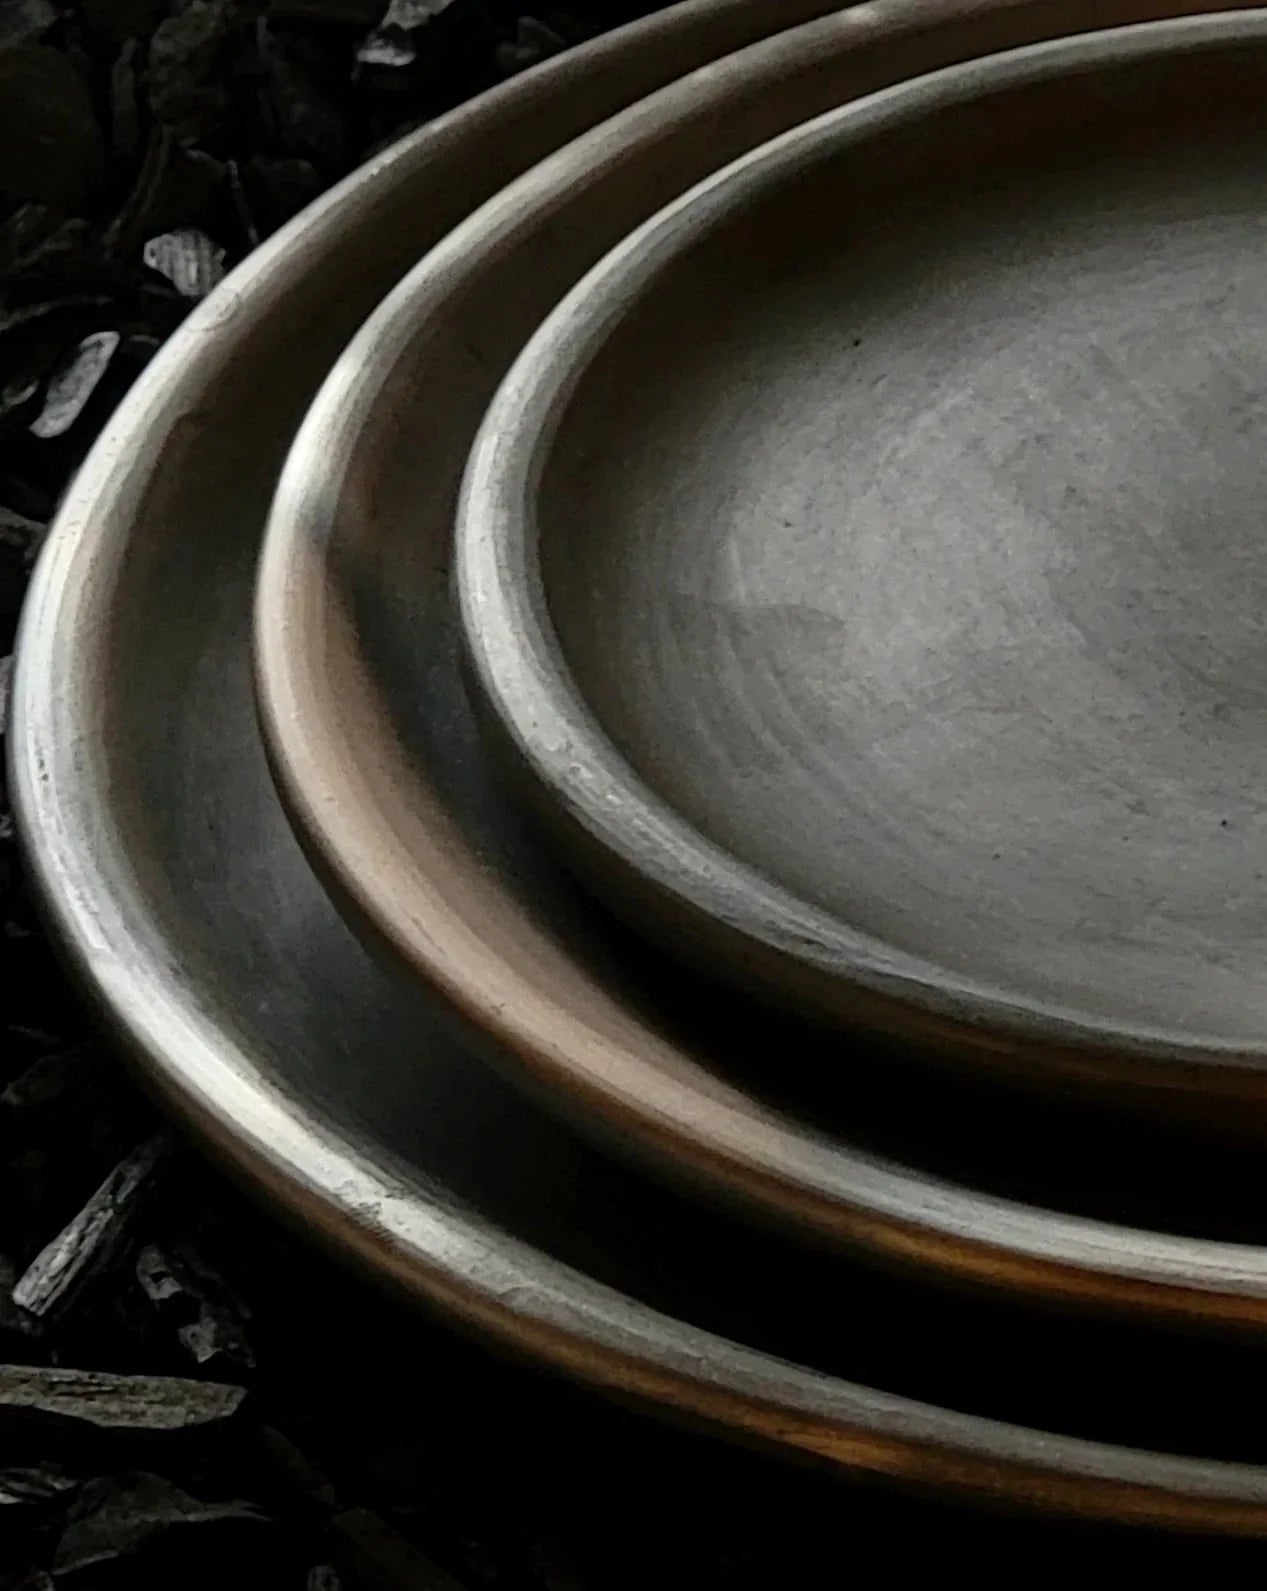 Oaxaca Black Clay Pottery Plate Set 